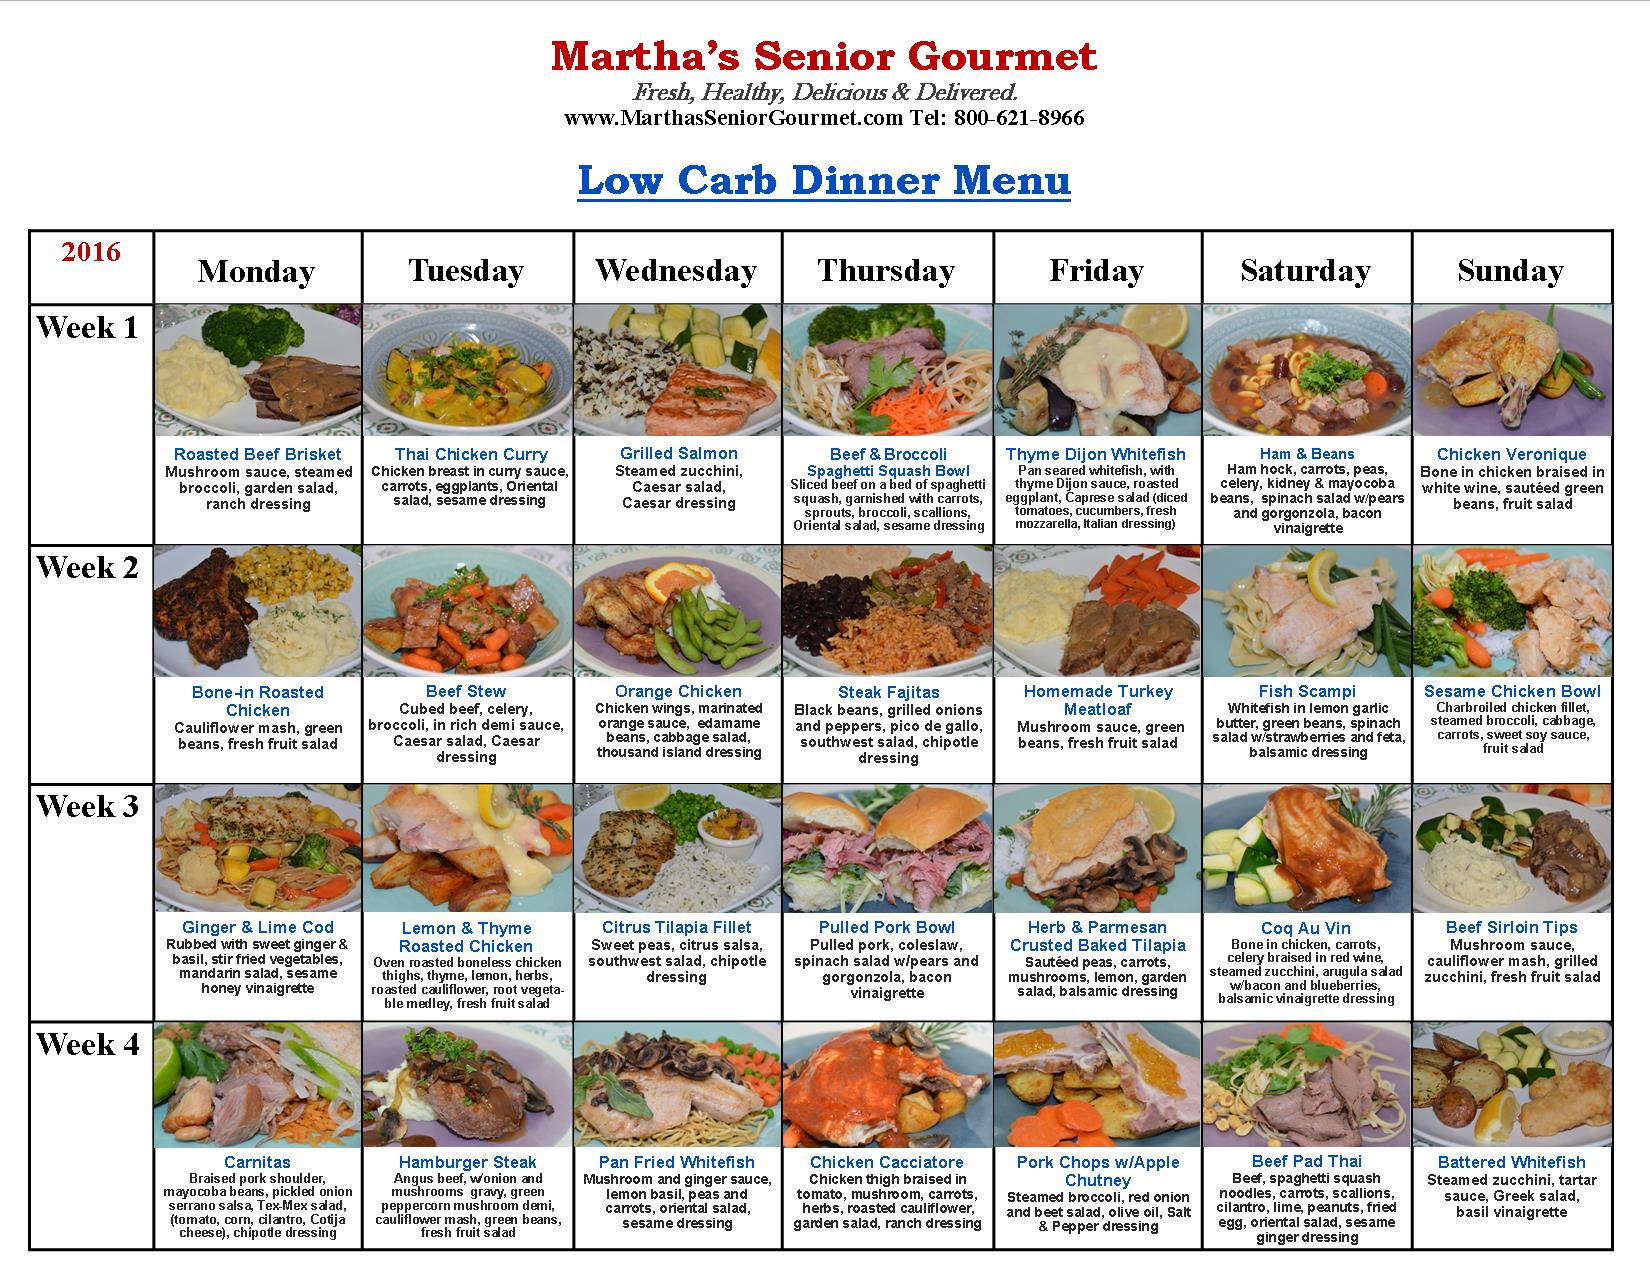 Low Carb Dinner Menu | Martha's Senior Gourmet